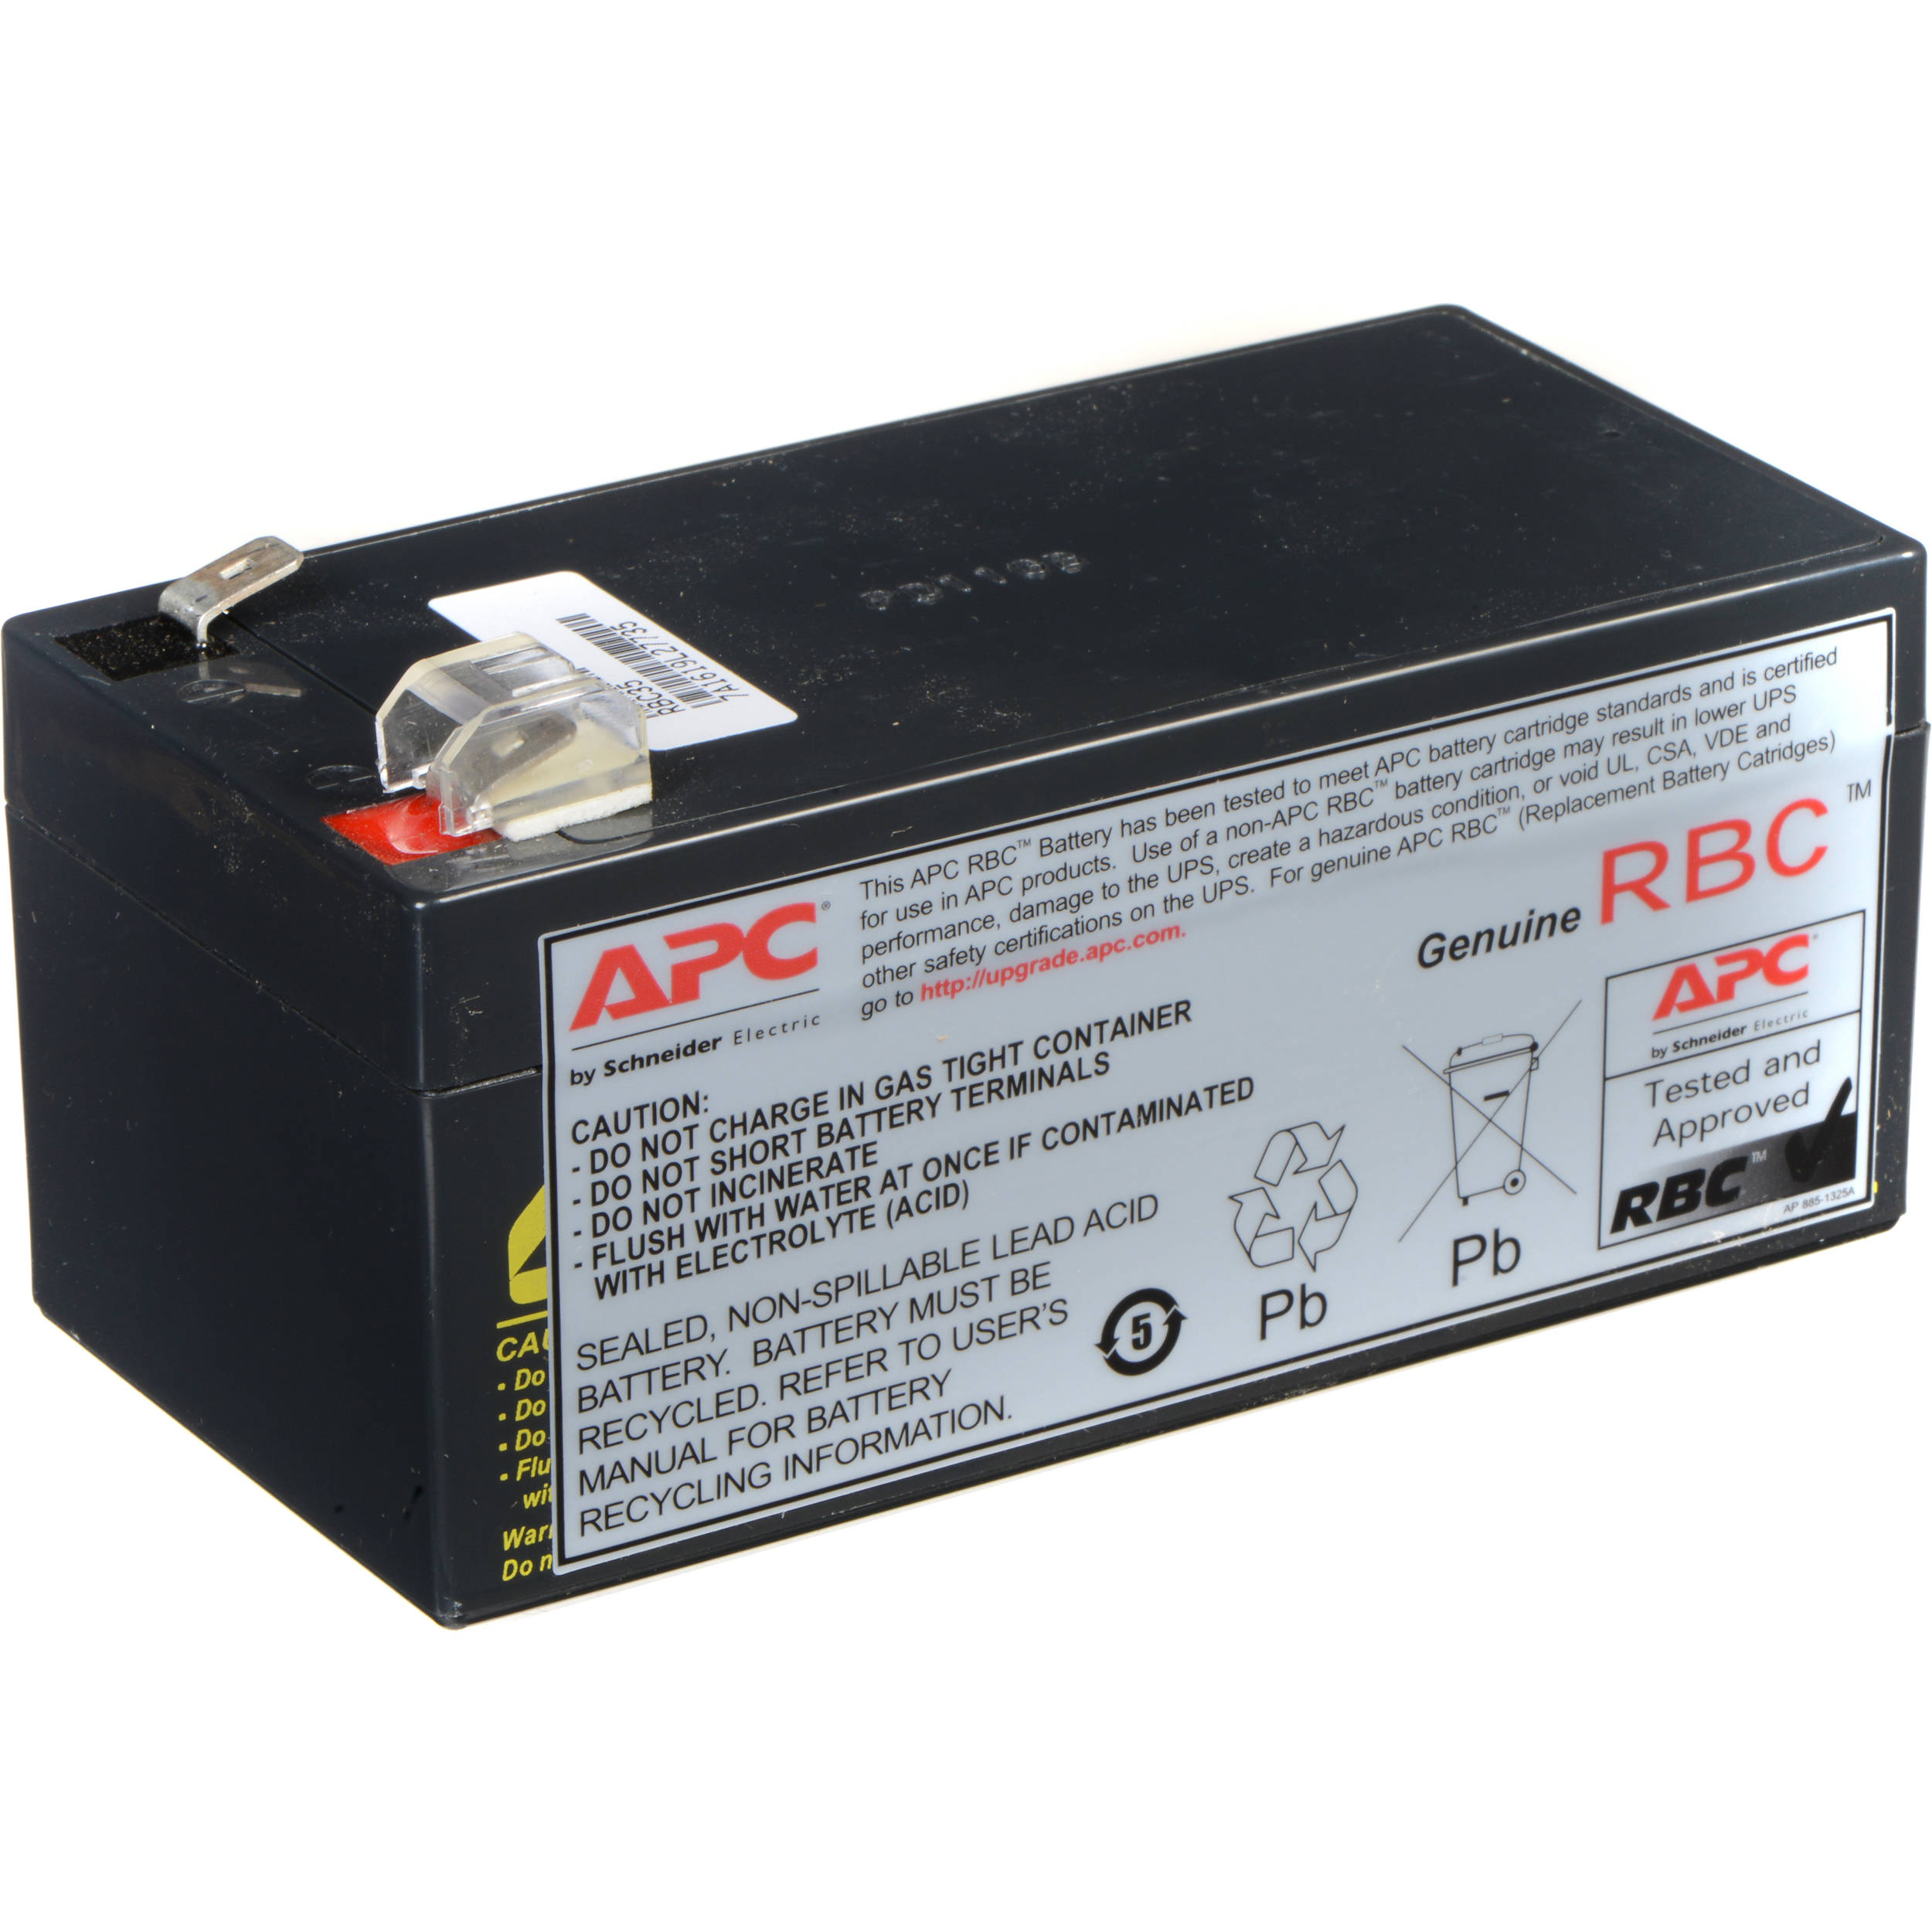 Apc batteries. APC Replacement Battery Cartridge. Аккумуляторная батарея Genuine RBC. Аккумулятор APC Genuine RBC. Аккумулятор для ИБП 12v 5a APC.